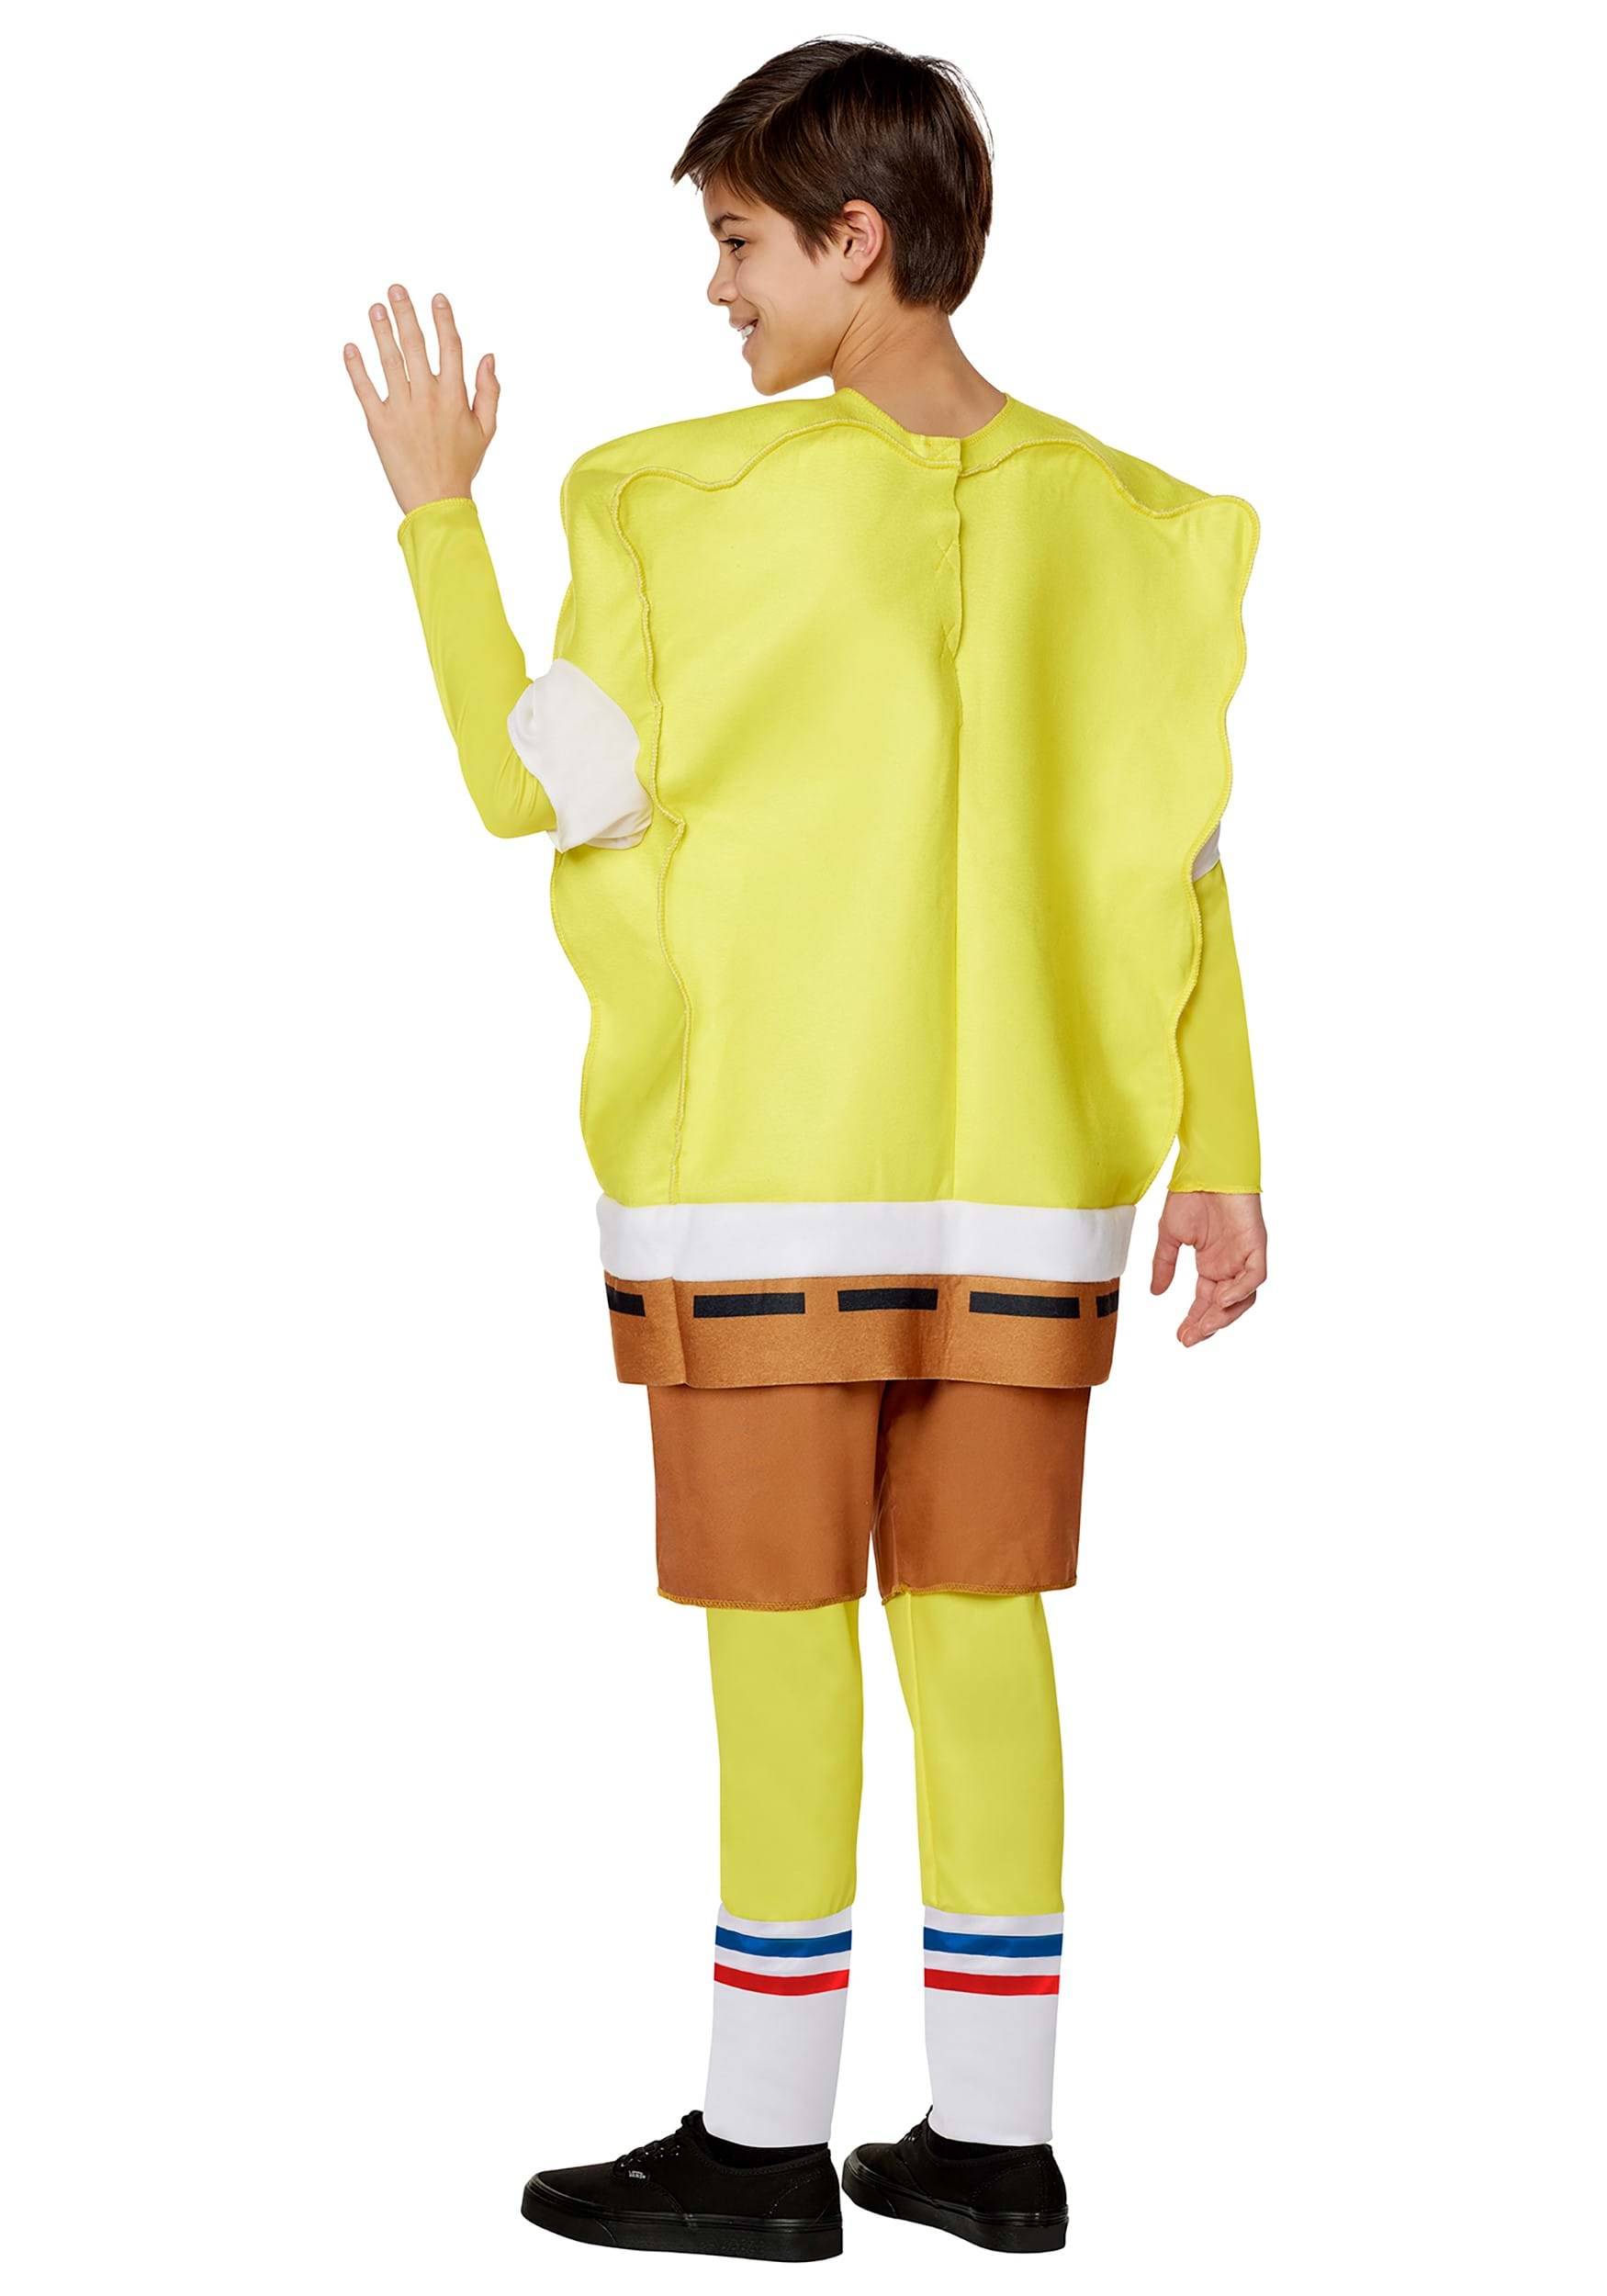 SpongeBob SquarePants Kid's Costume